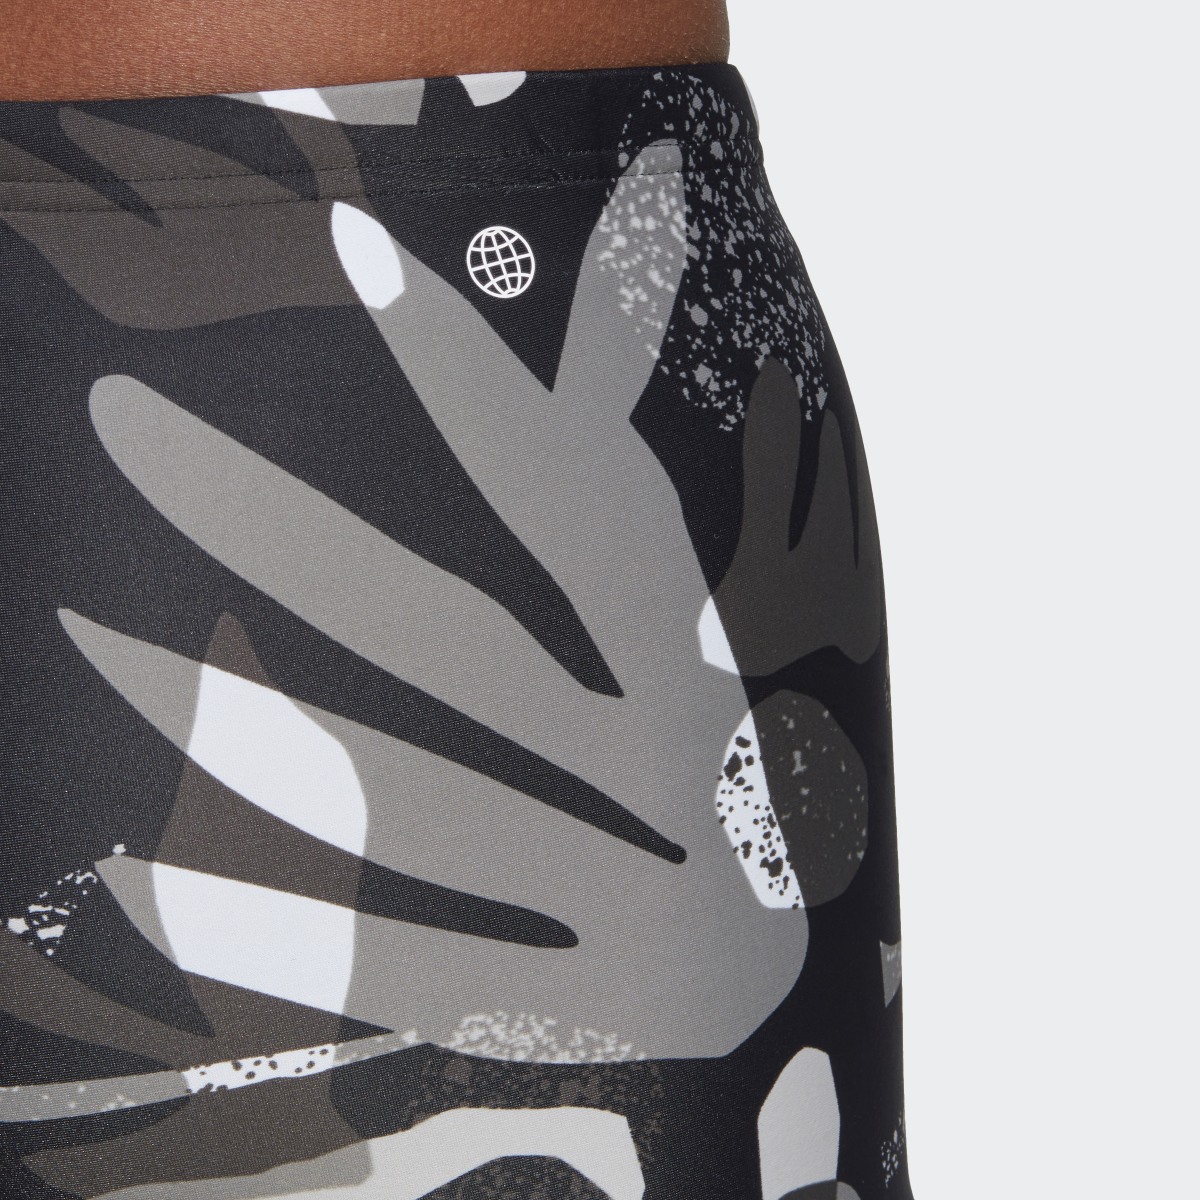 Adidas Floral Graphic Swim Boxers. 6